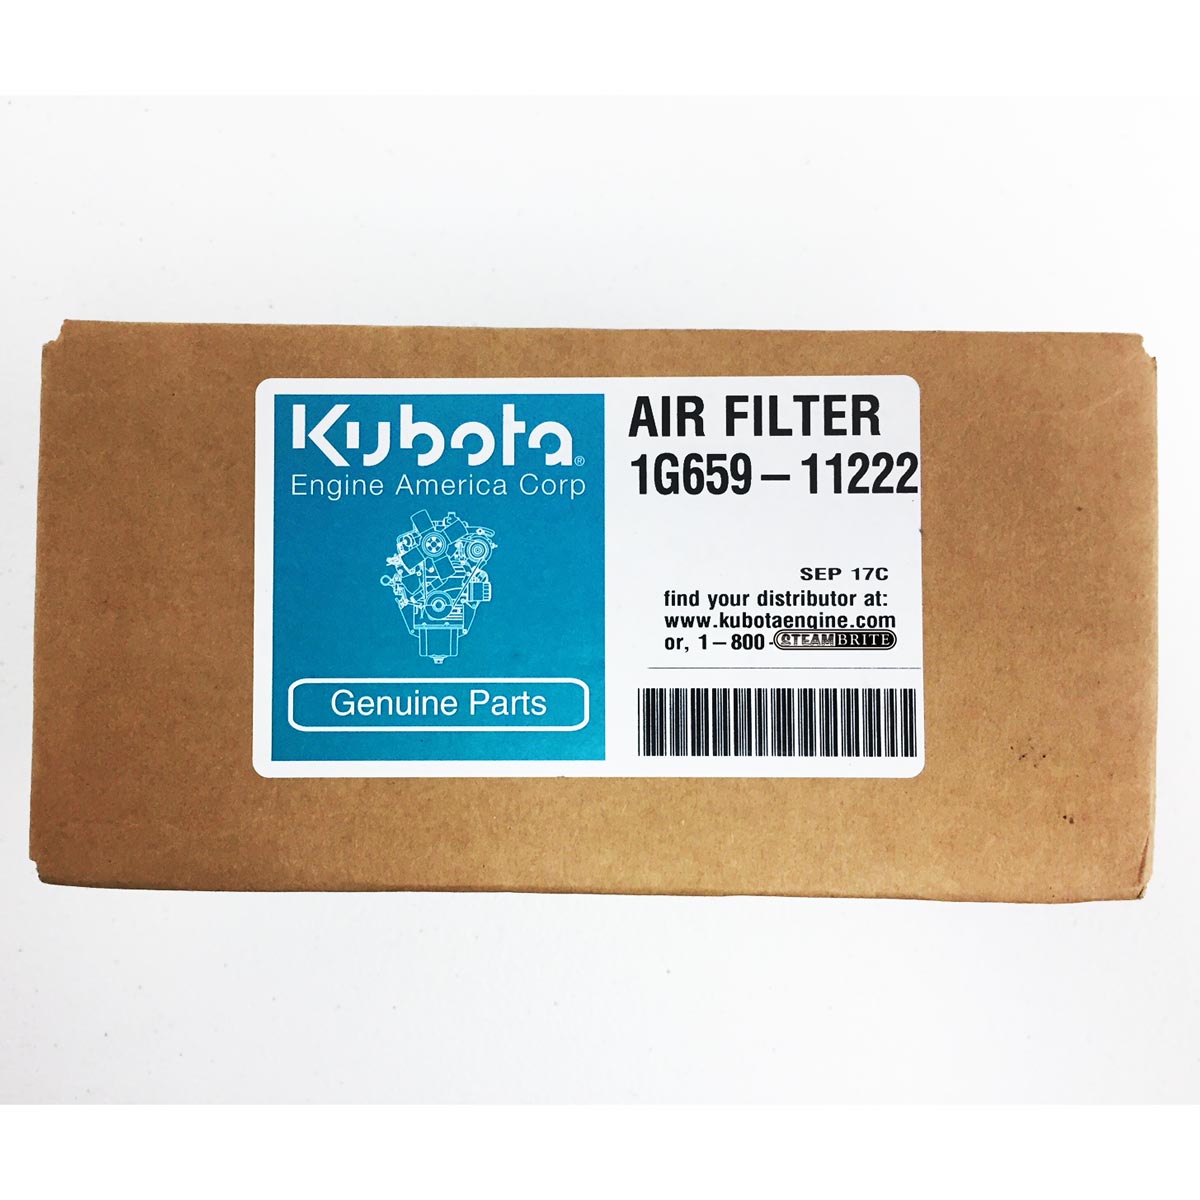 Kubota Filter Air Kubota - 8.751-856.0  1G659-11222